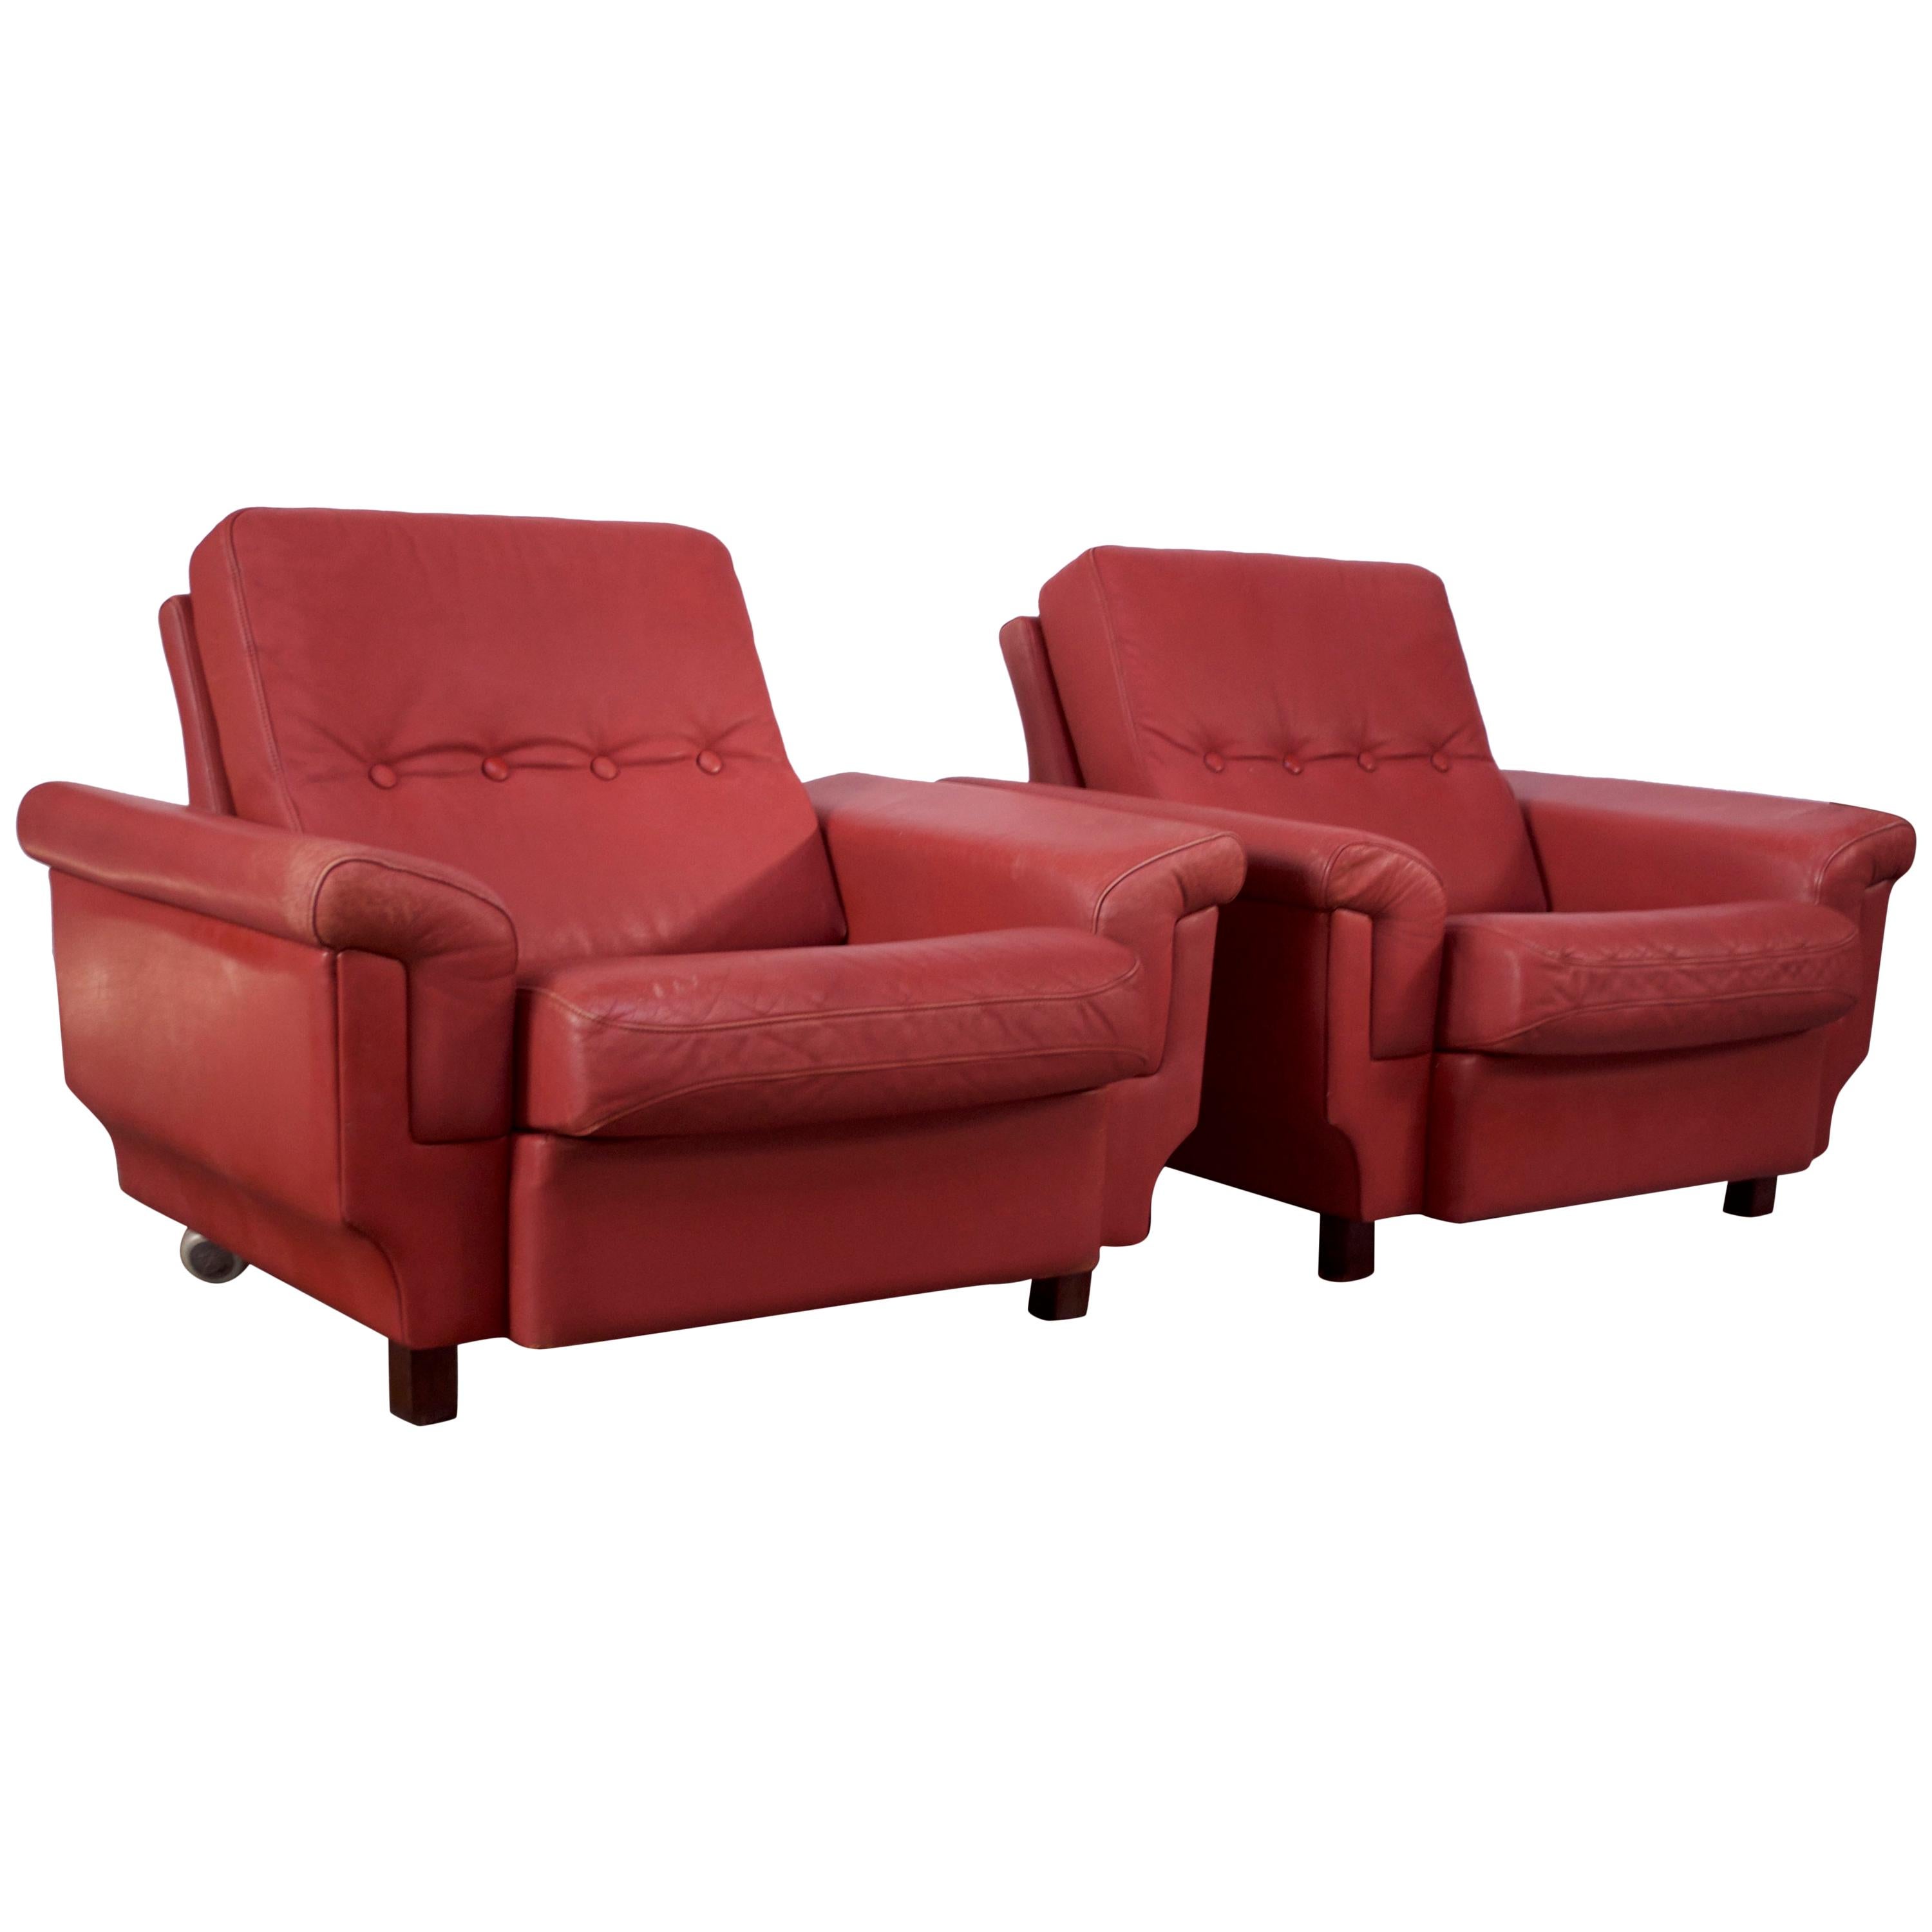 Pair of Danish Modern Lounge Chairs in Cinnabar Leather